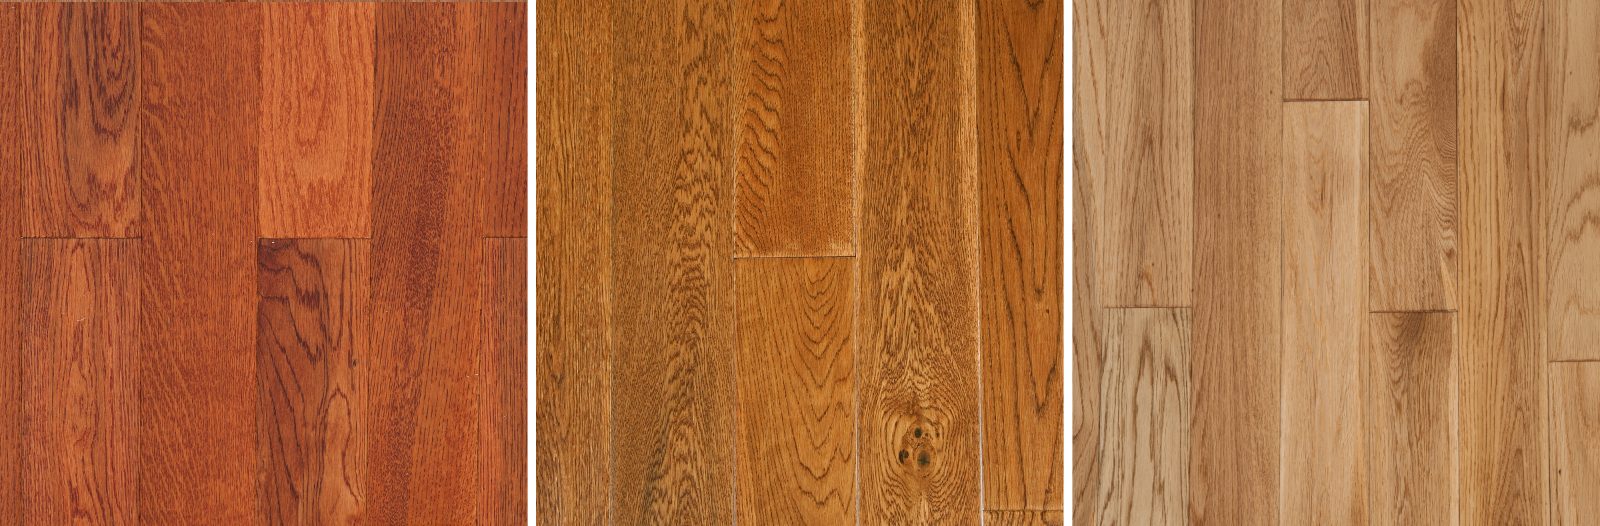 Comparison of White Oak Hardwood Flooring